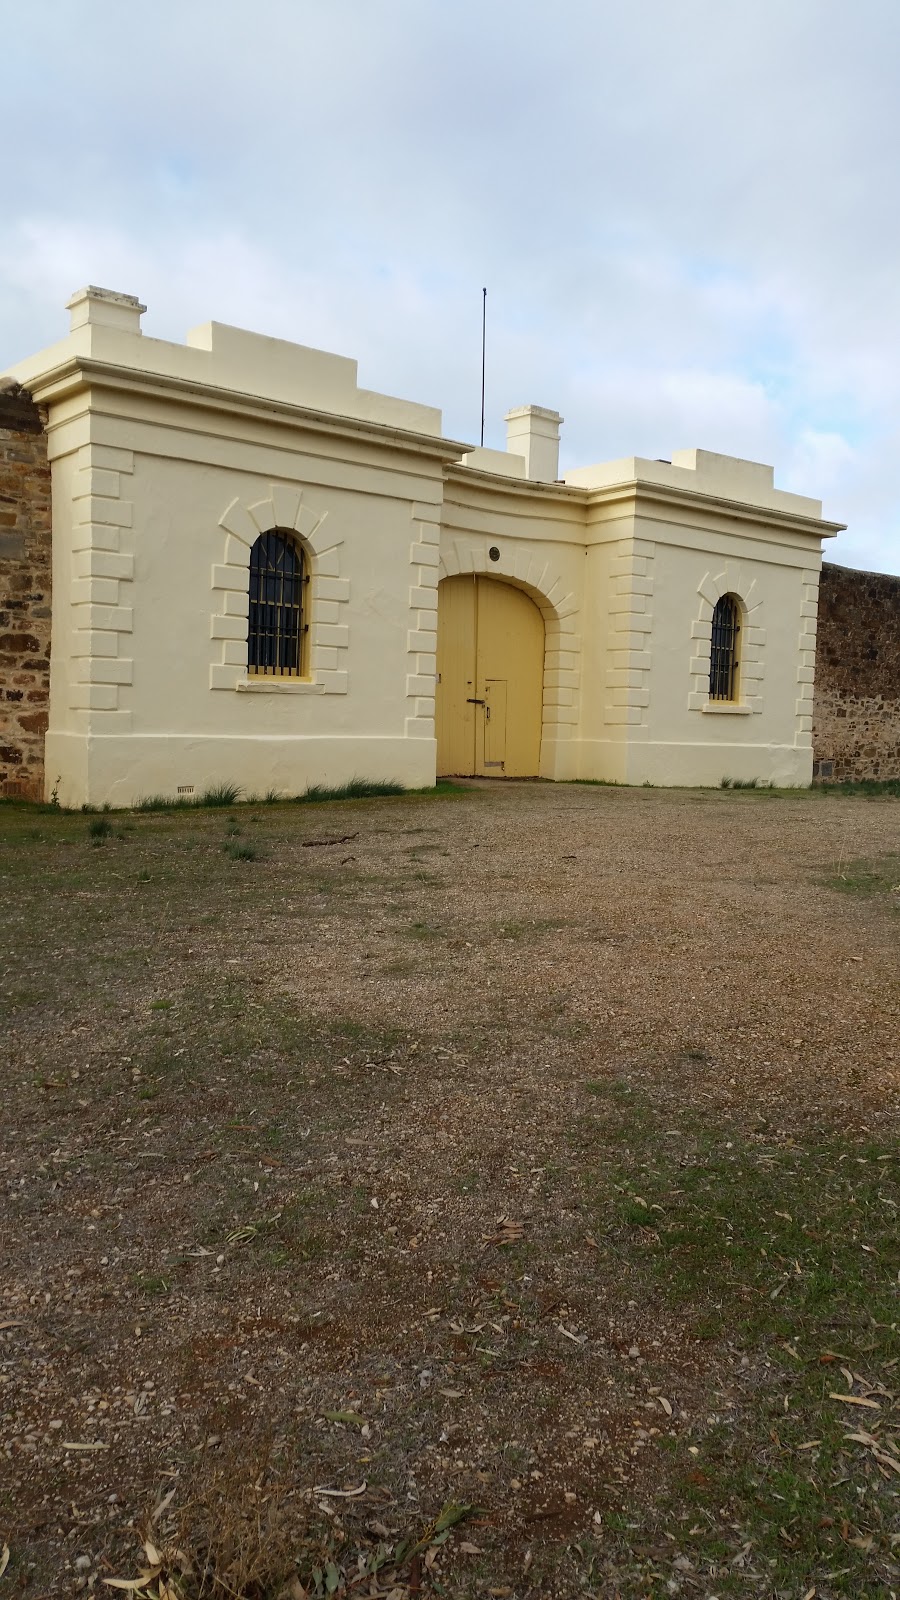 Redruth Gaol | museum | Burra SA 5417, Australia